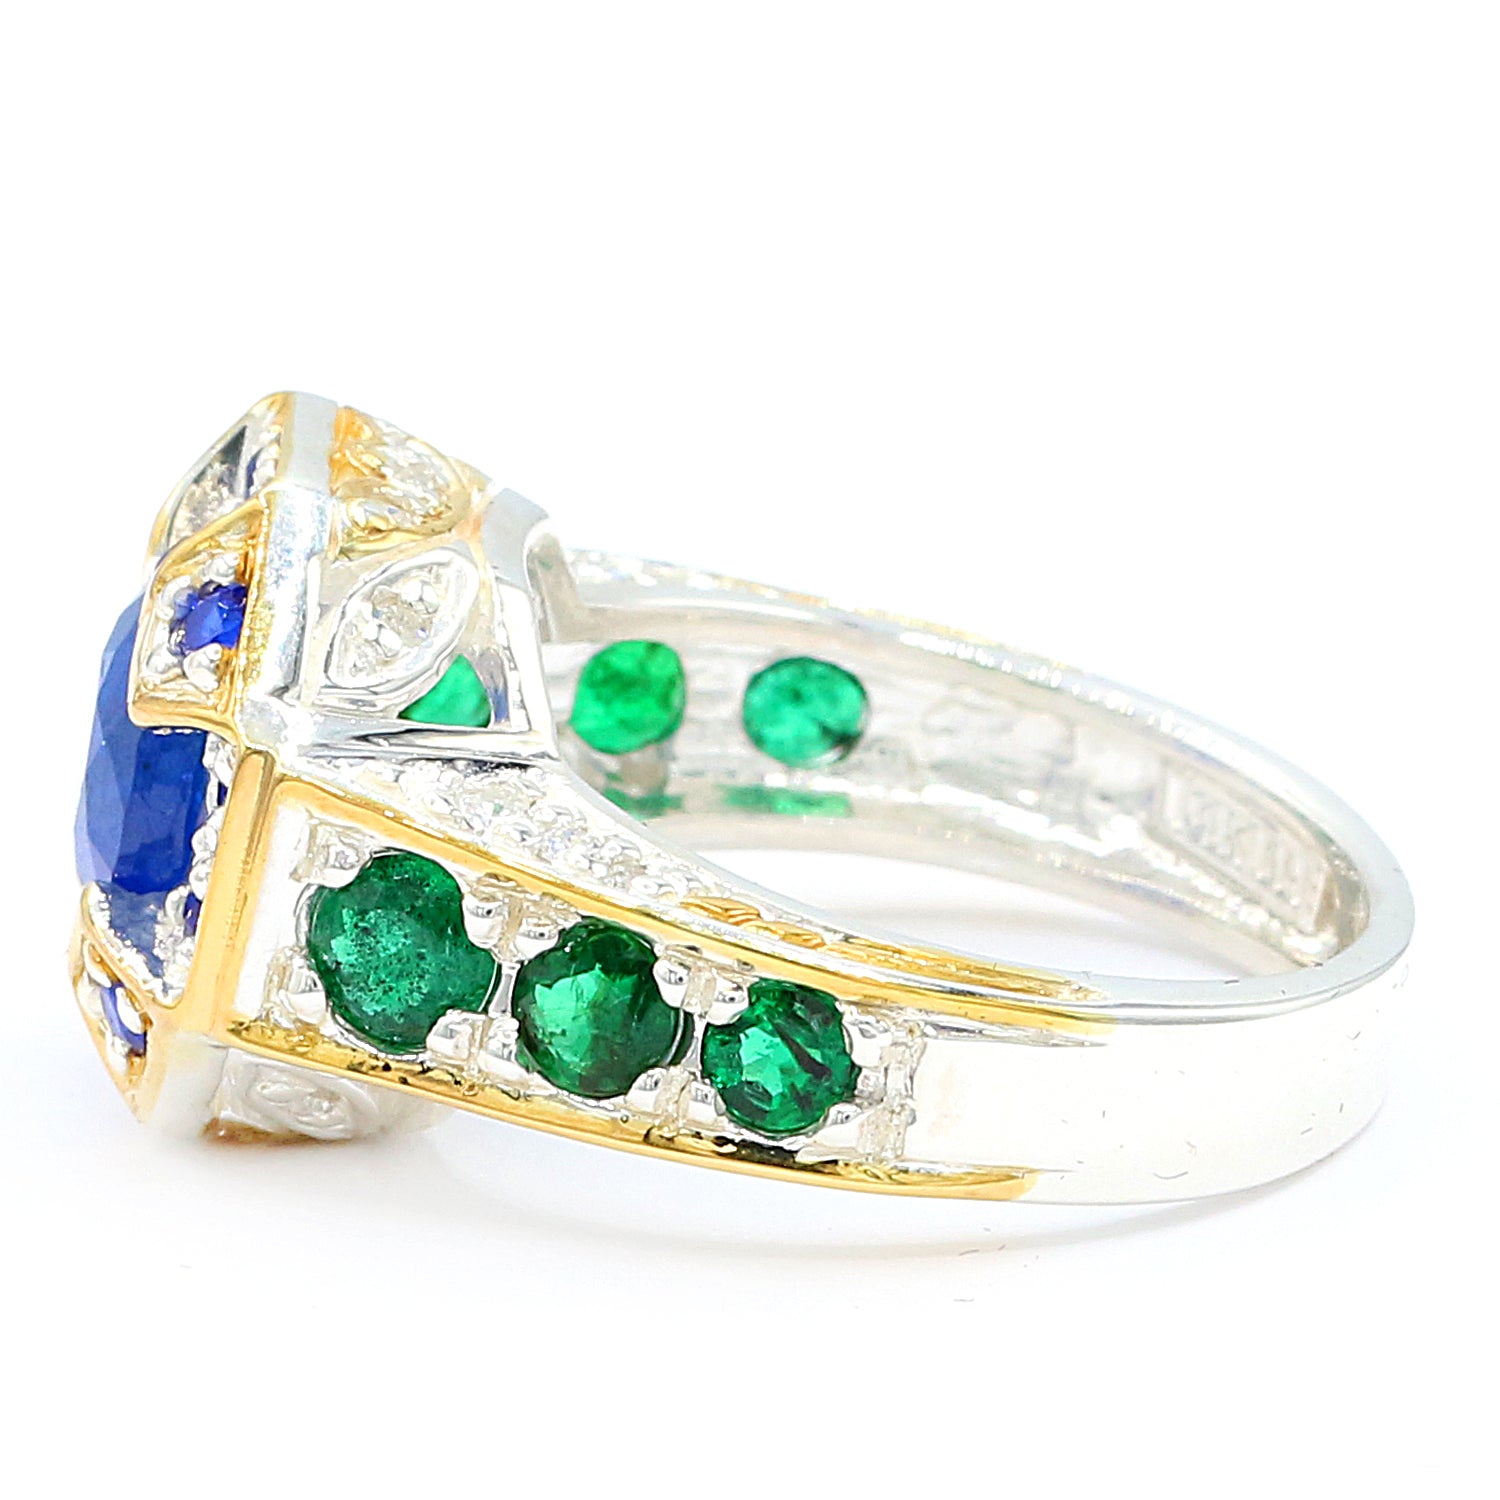 Michael's Originals One-of-a-kind 3.00ctw Cobalt Blue Spinel, Emerald & Diamond Ring